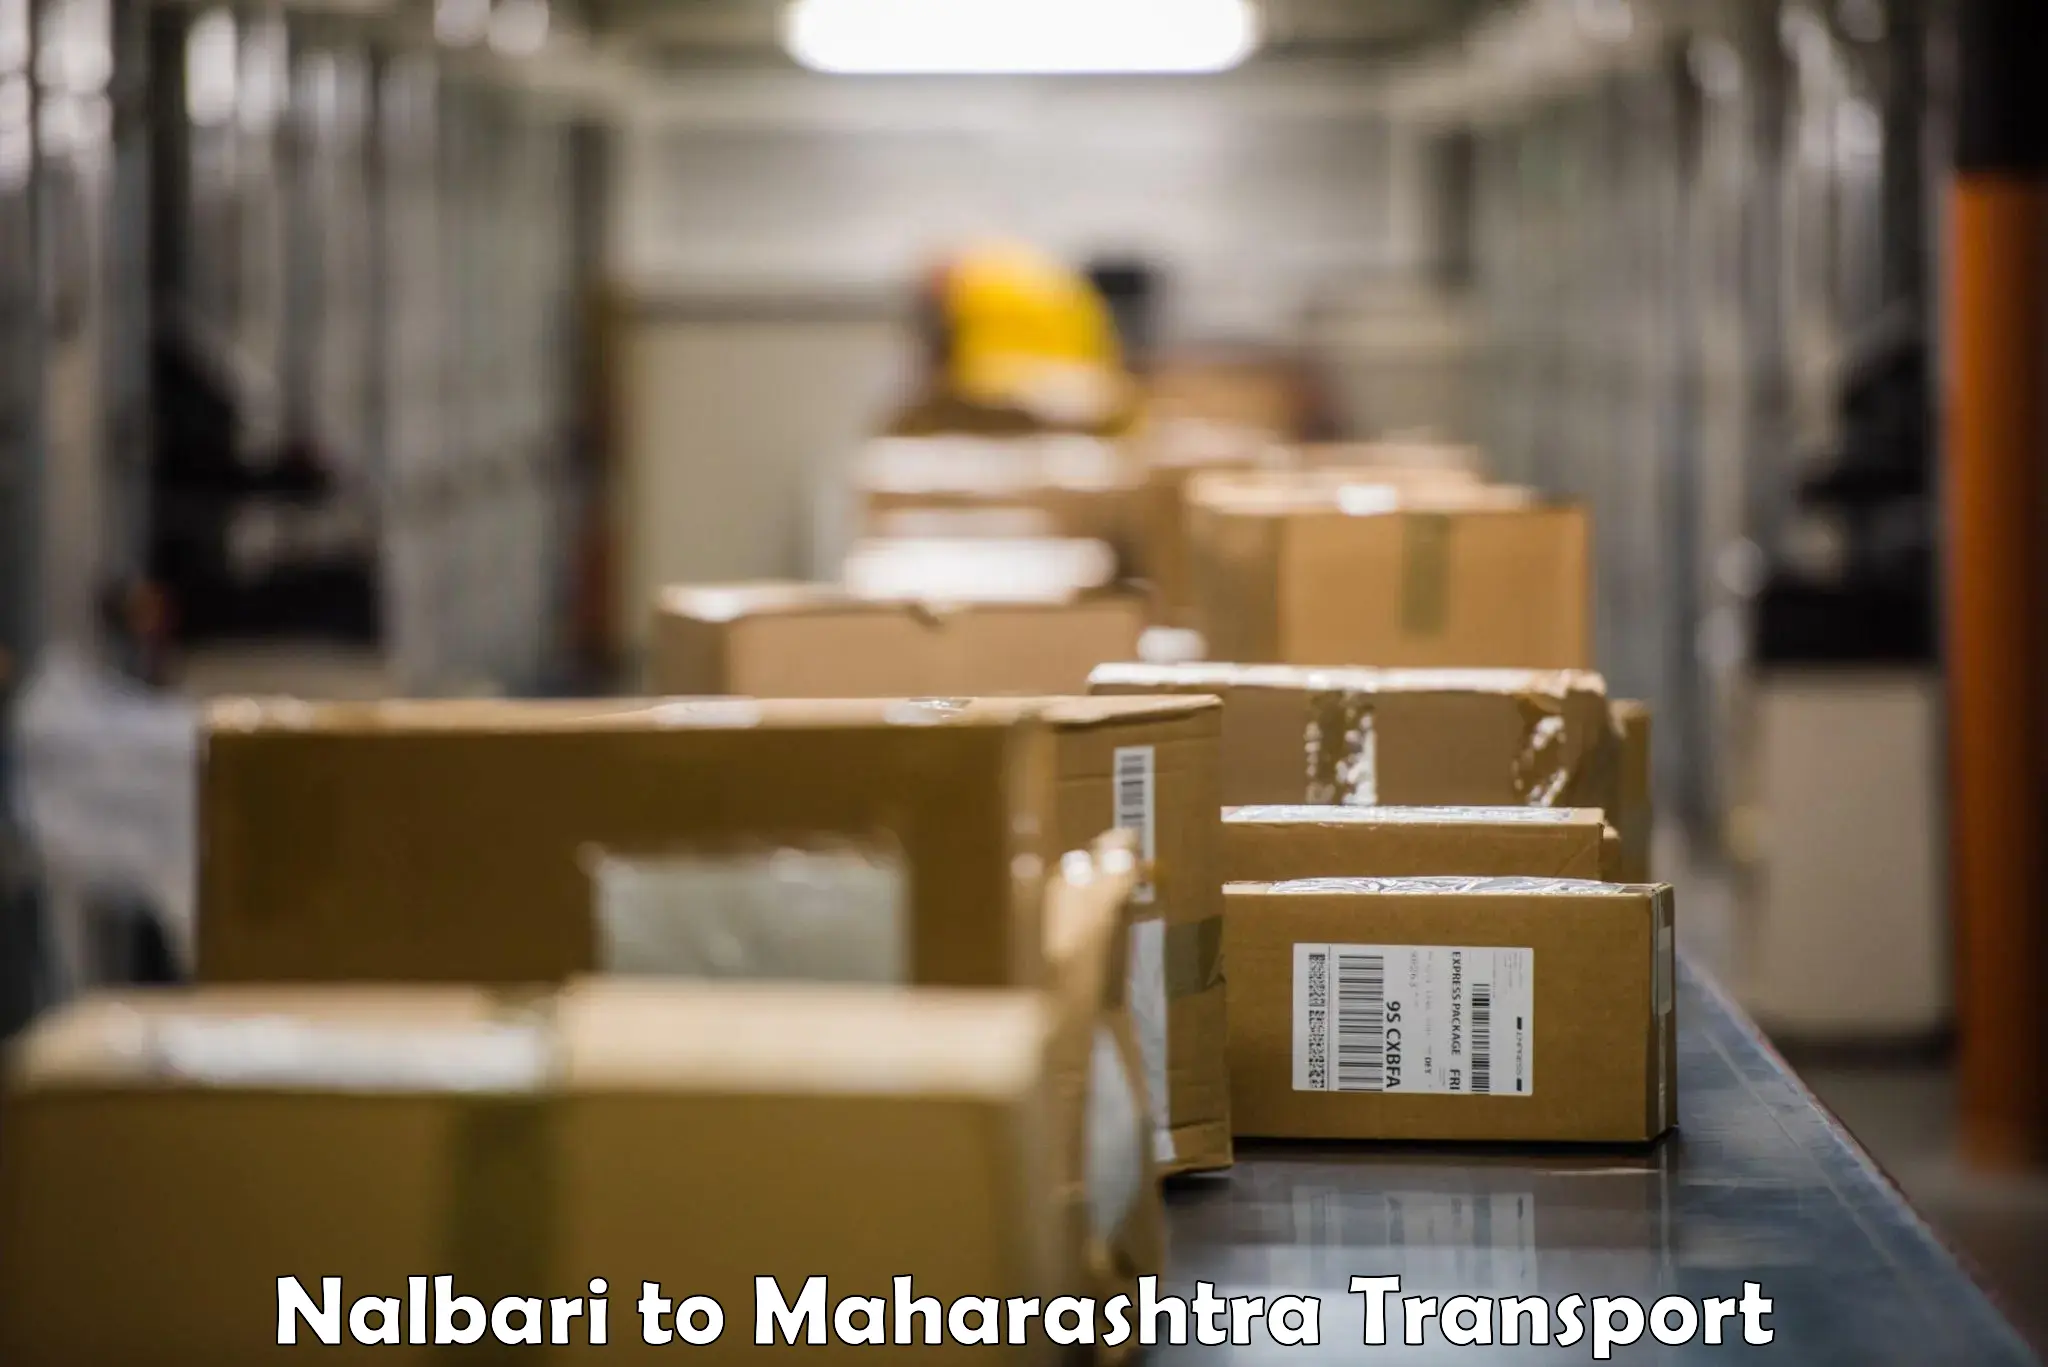 Goods delivery service Nalbari to Jasai